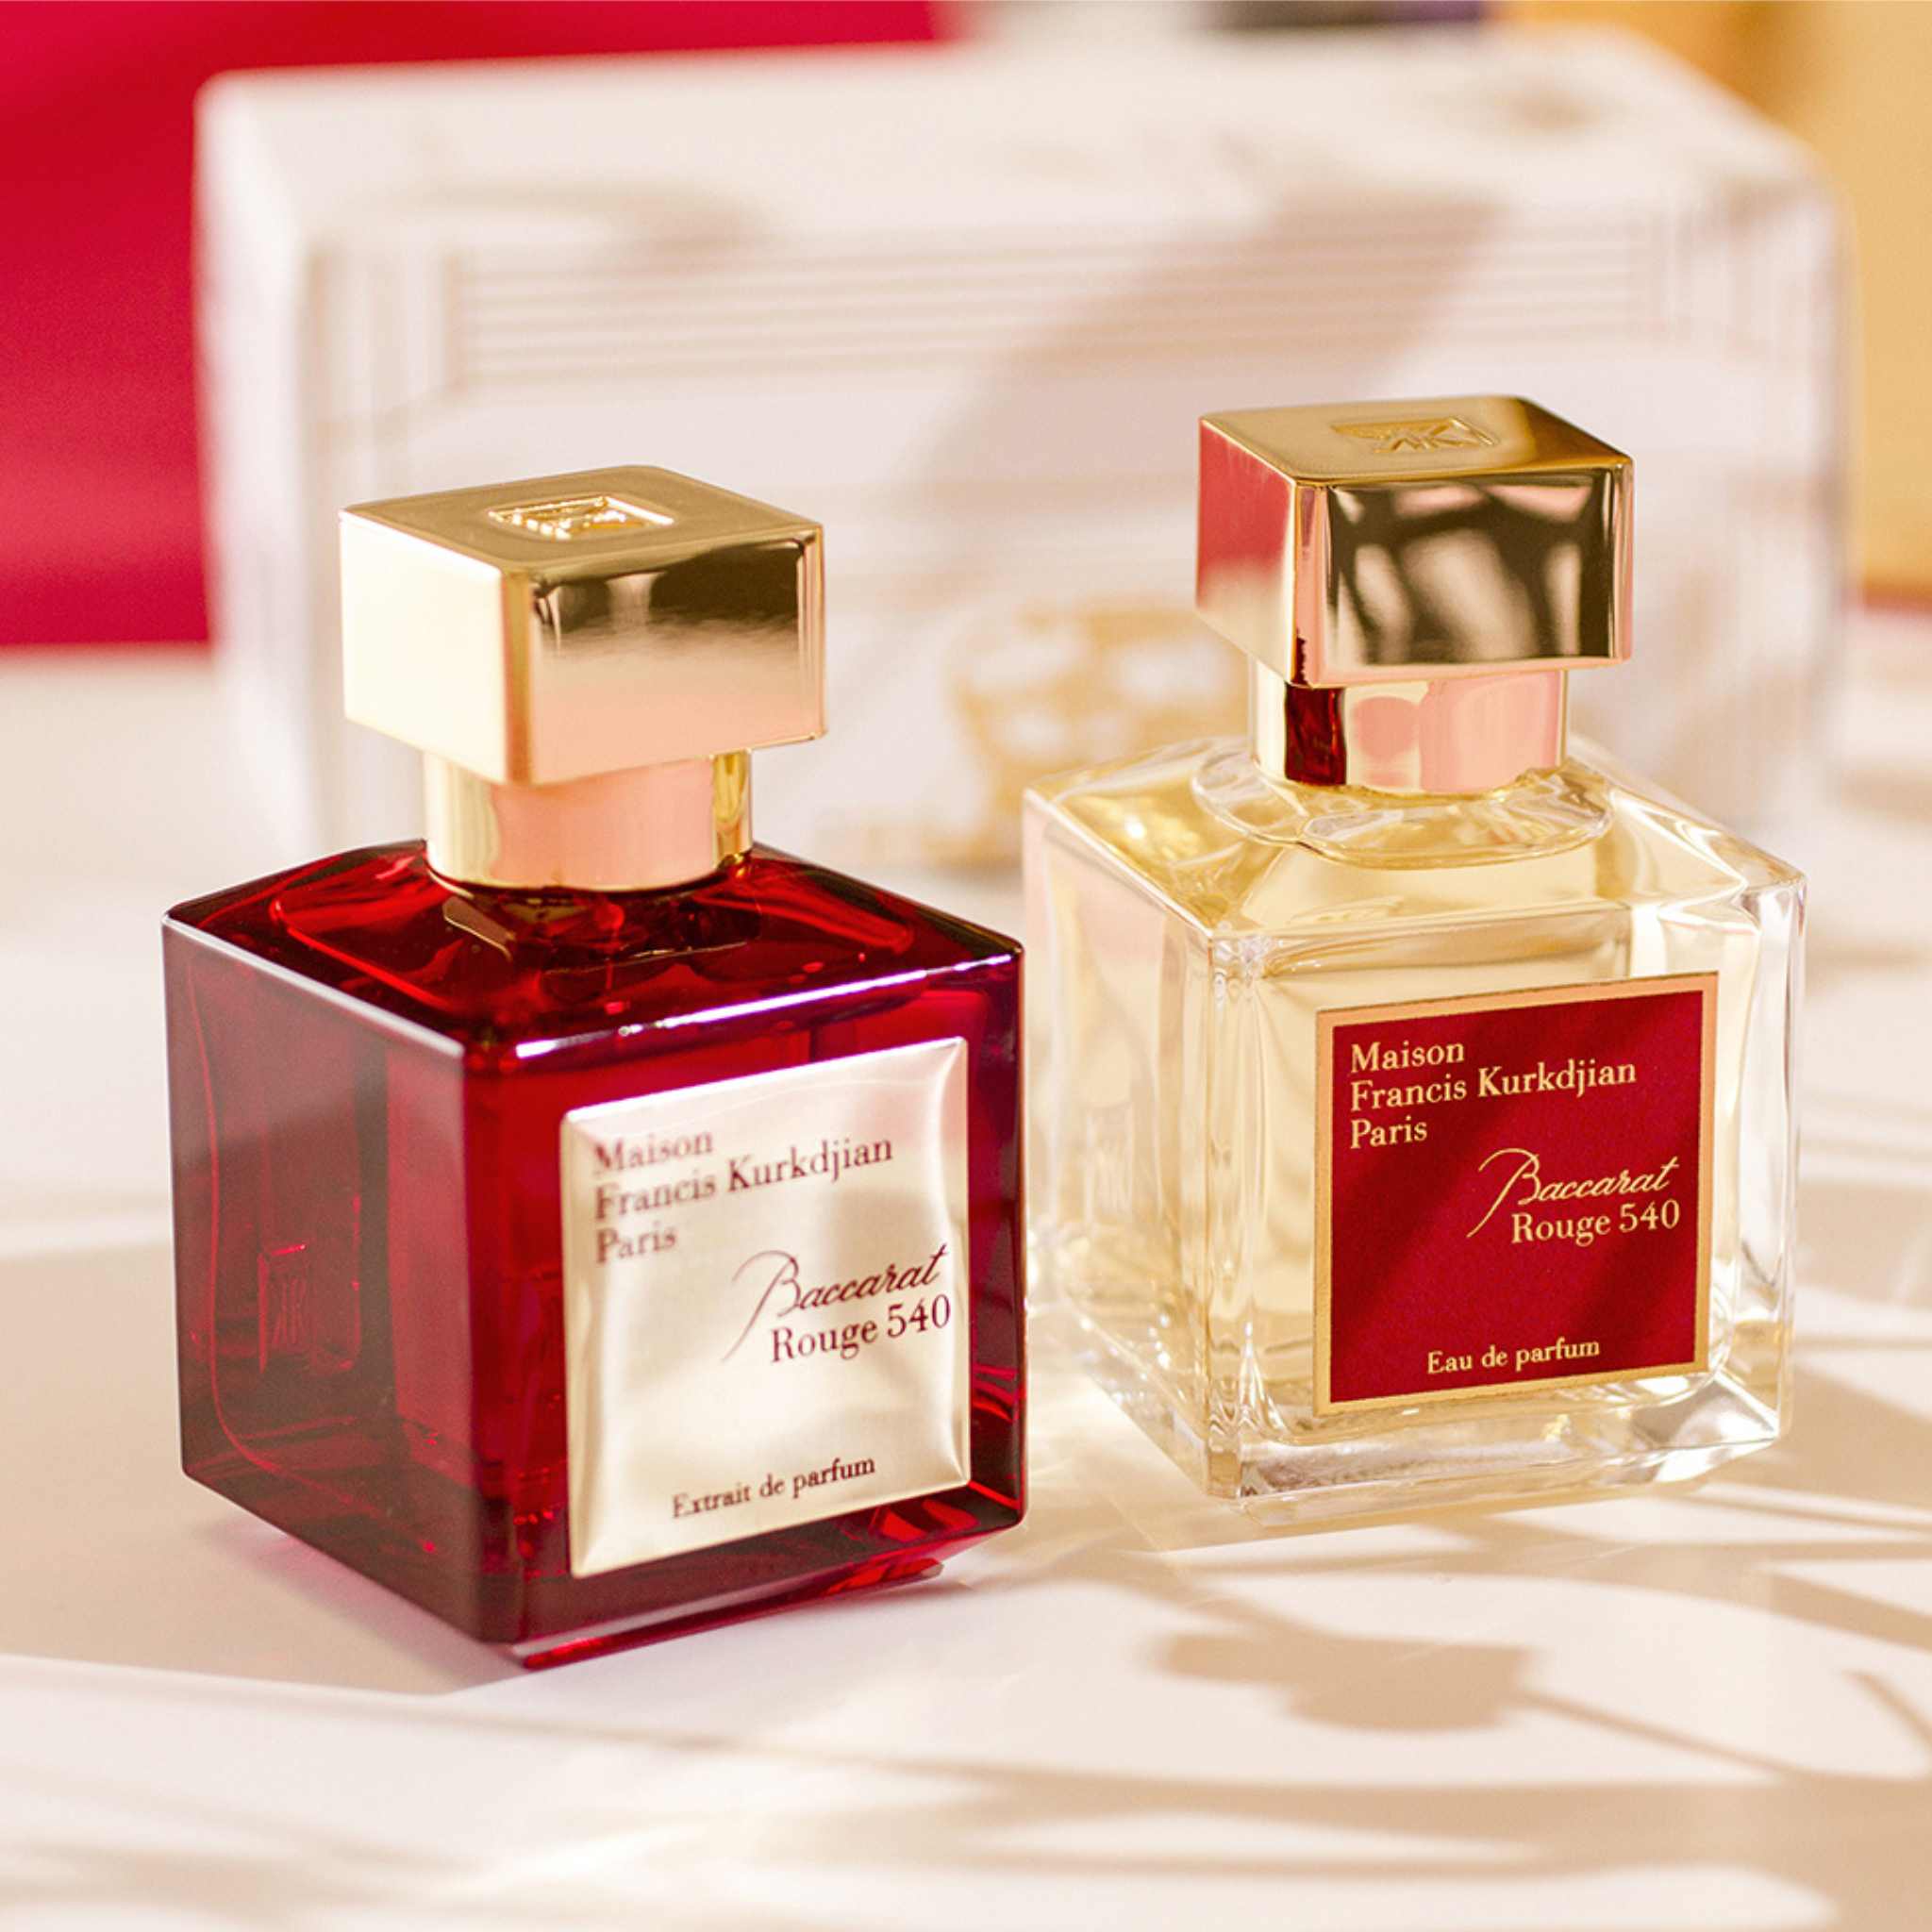 Baccarat rouge 540 maison Francis kurkdjian perfume